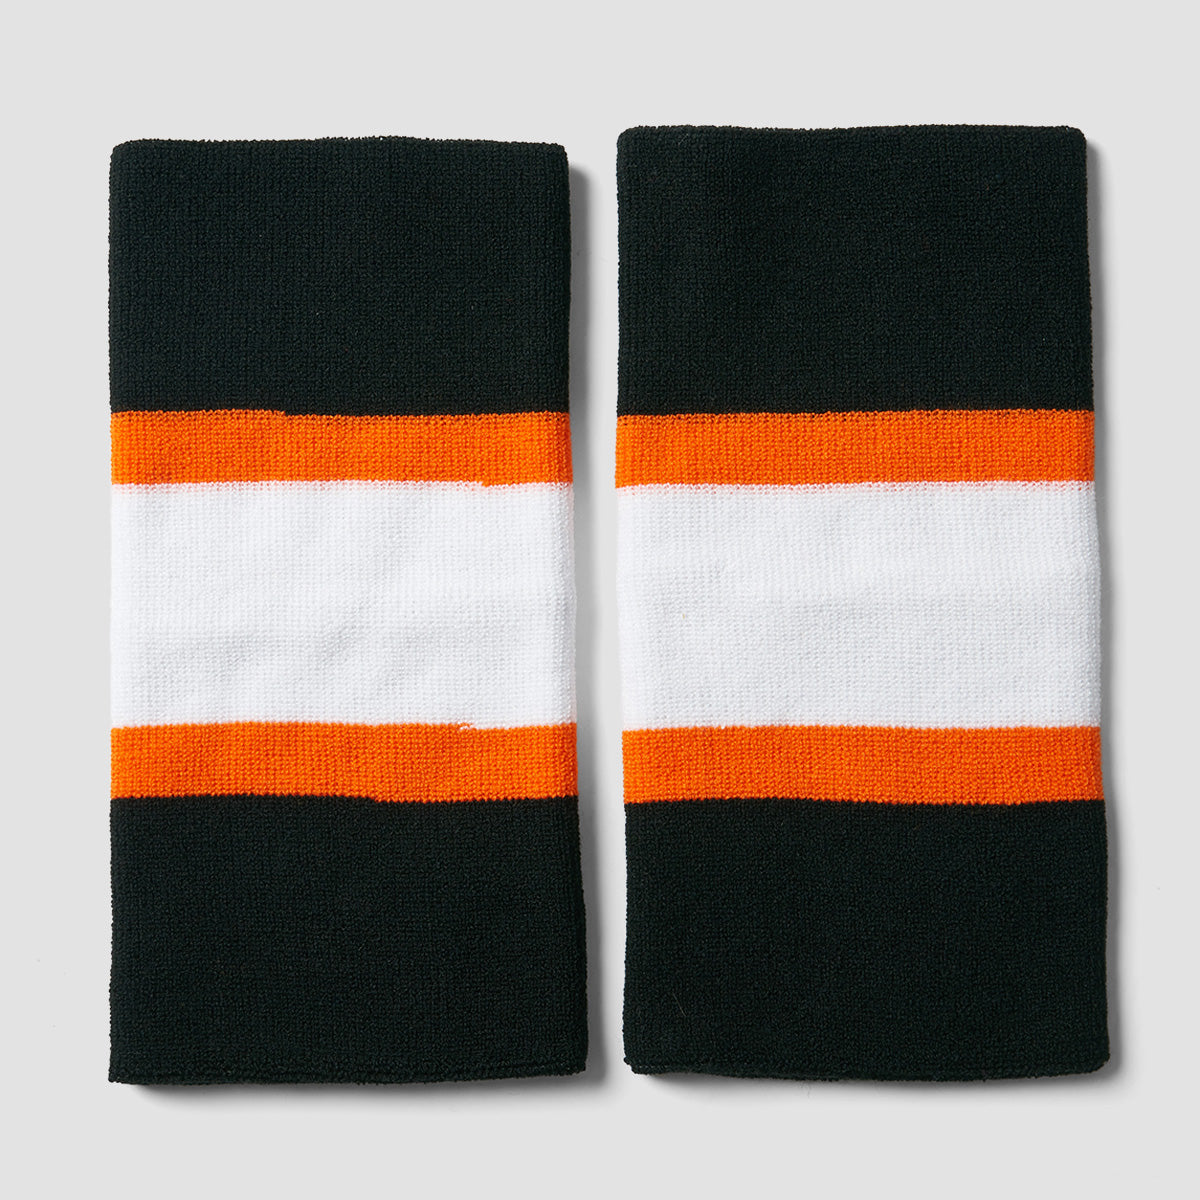 Ventronic Puffers Skate Hockey Socks Leg Warmers Black/White/Orange